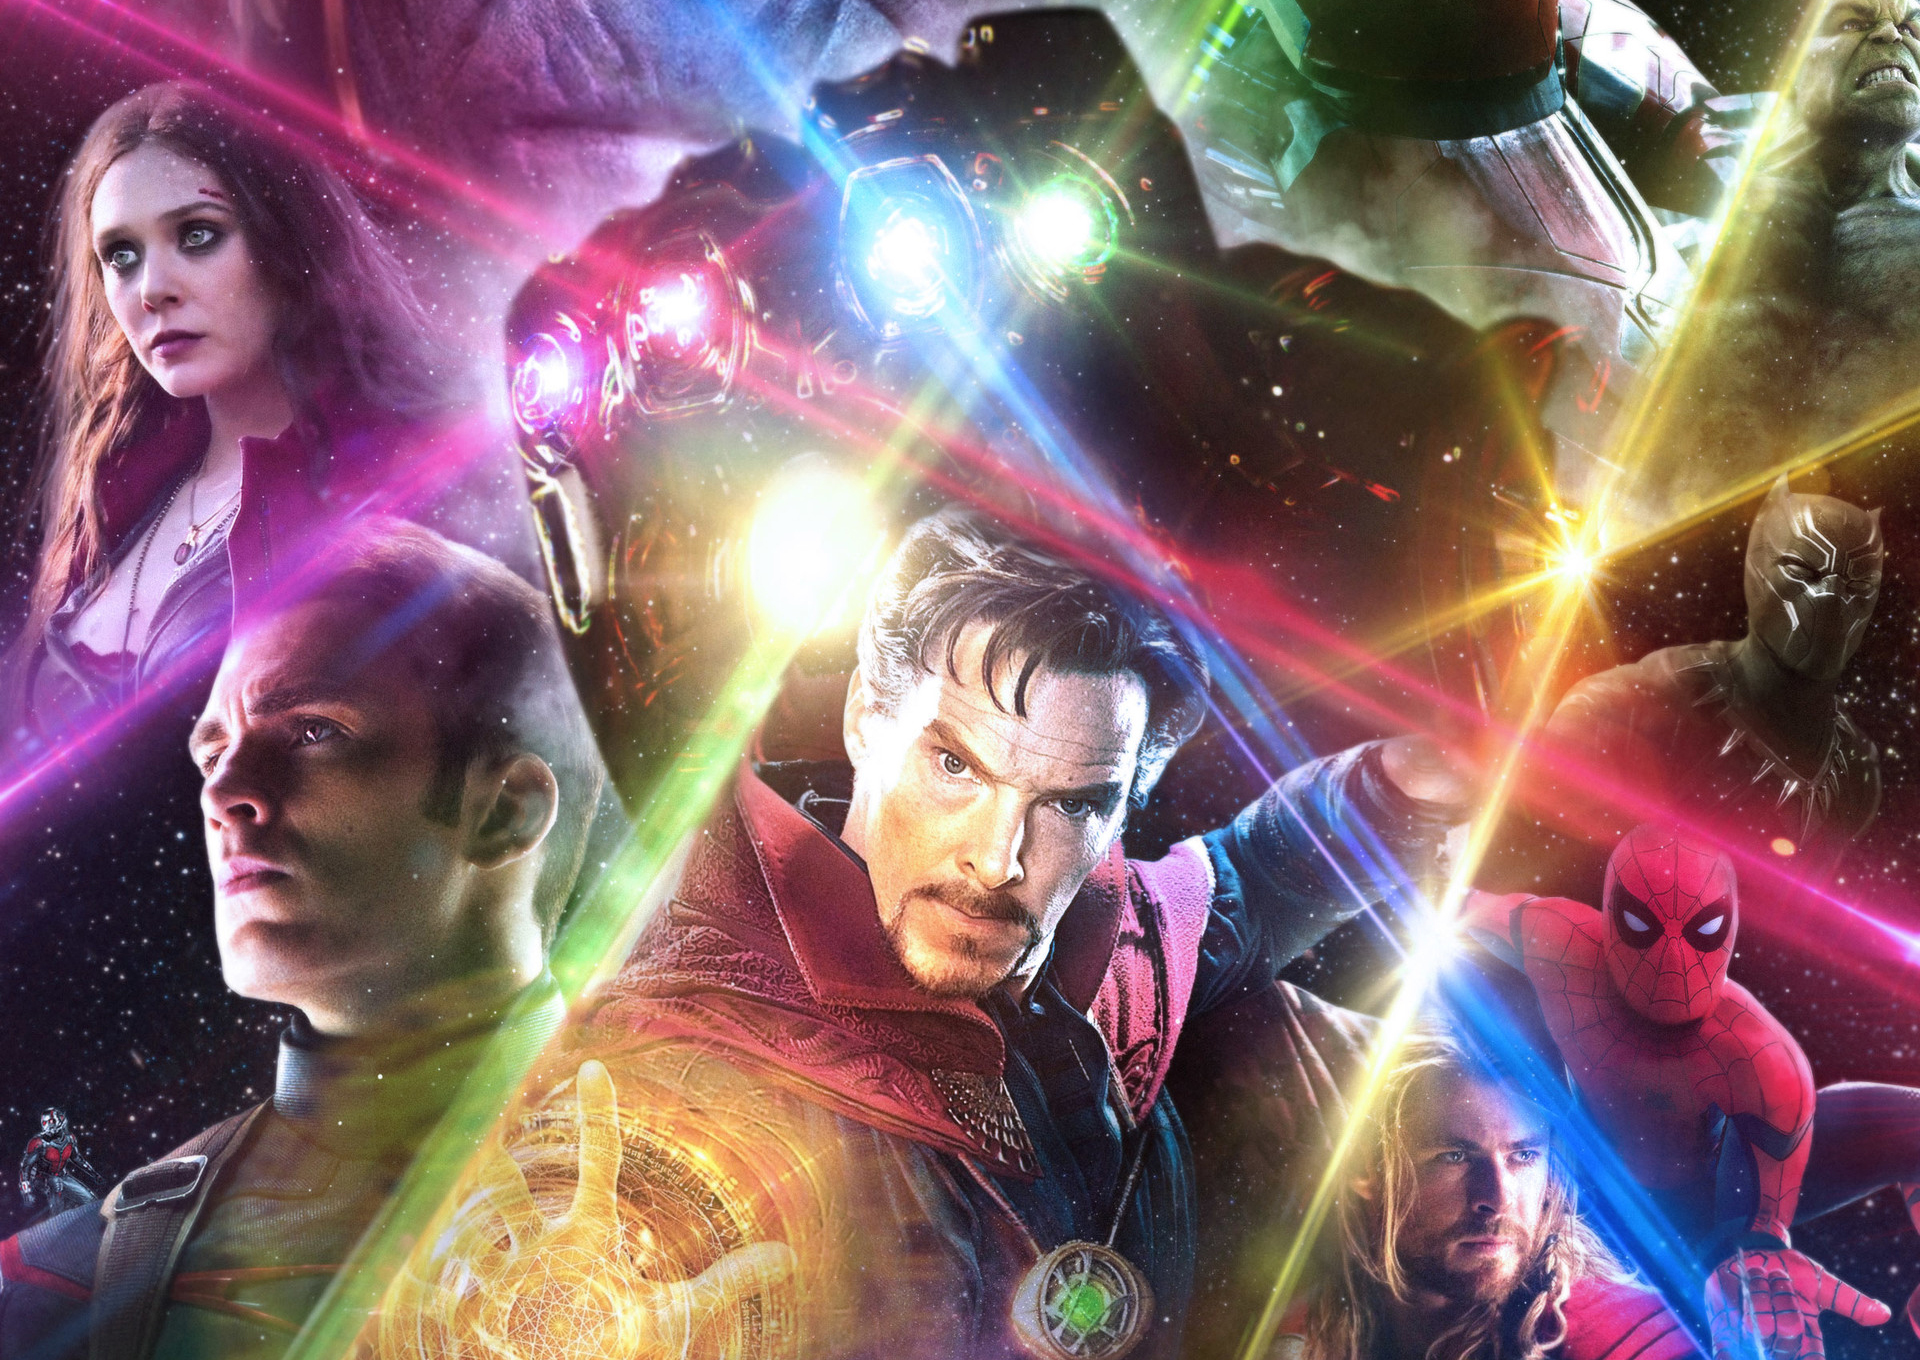 Avengers Infinity War HD Wallpaper Background Image